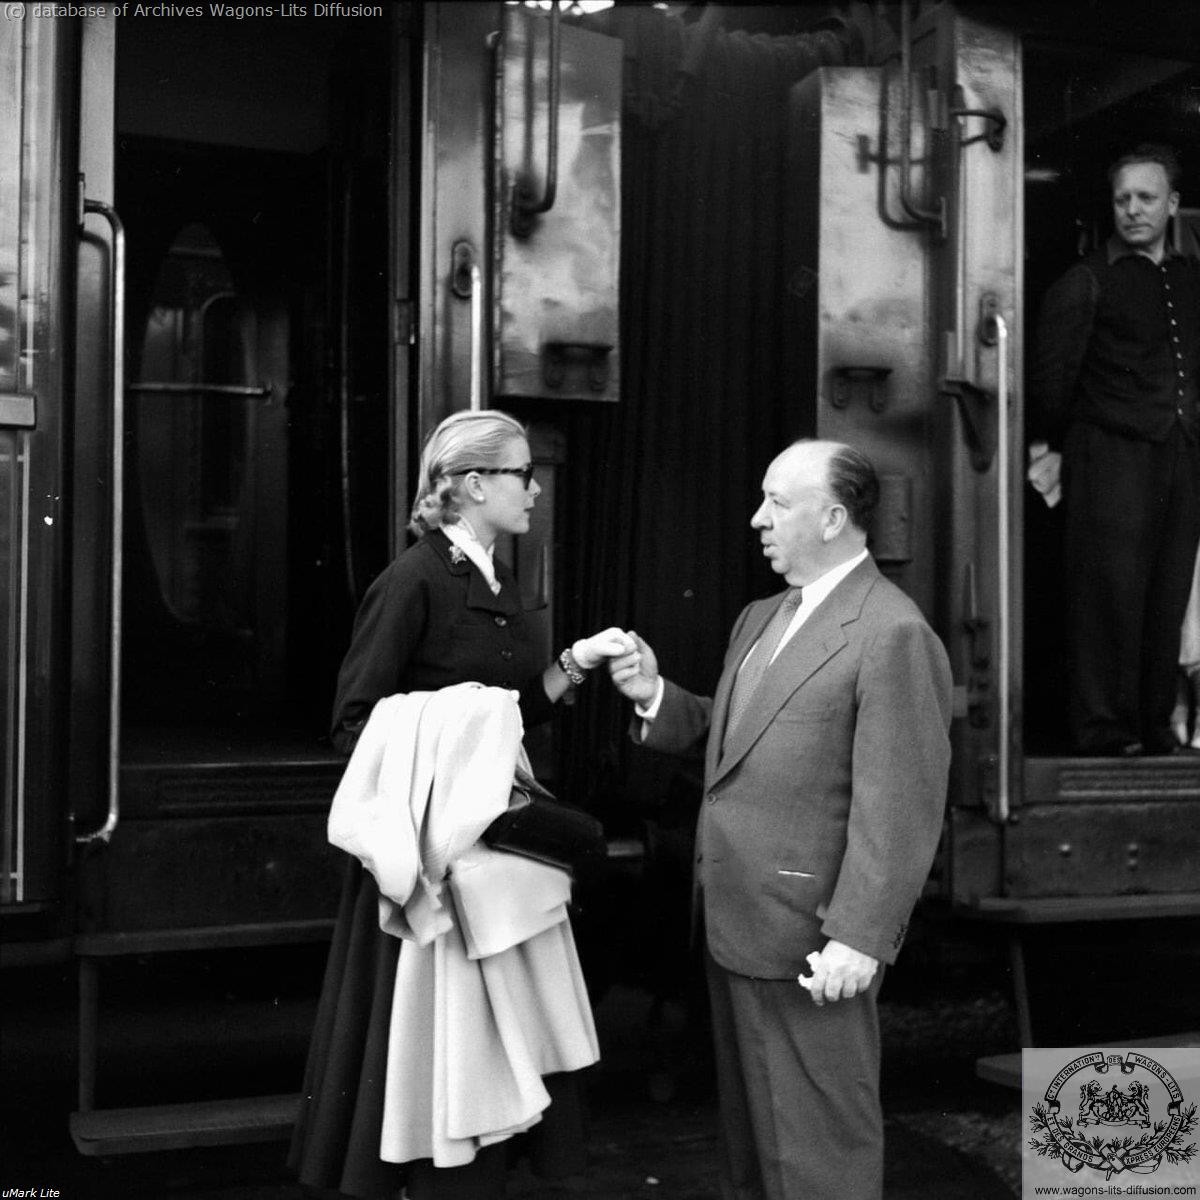 Wl grace kelly hitchkock accueil train bleu vers 1950